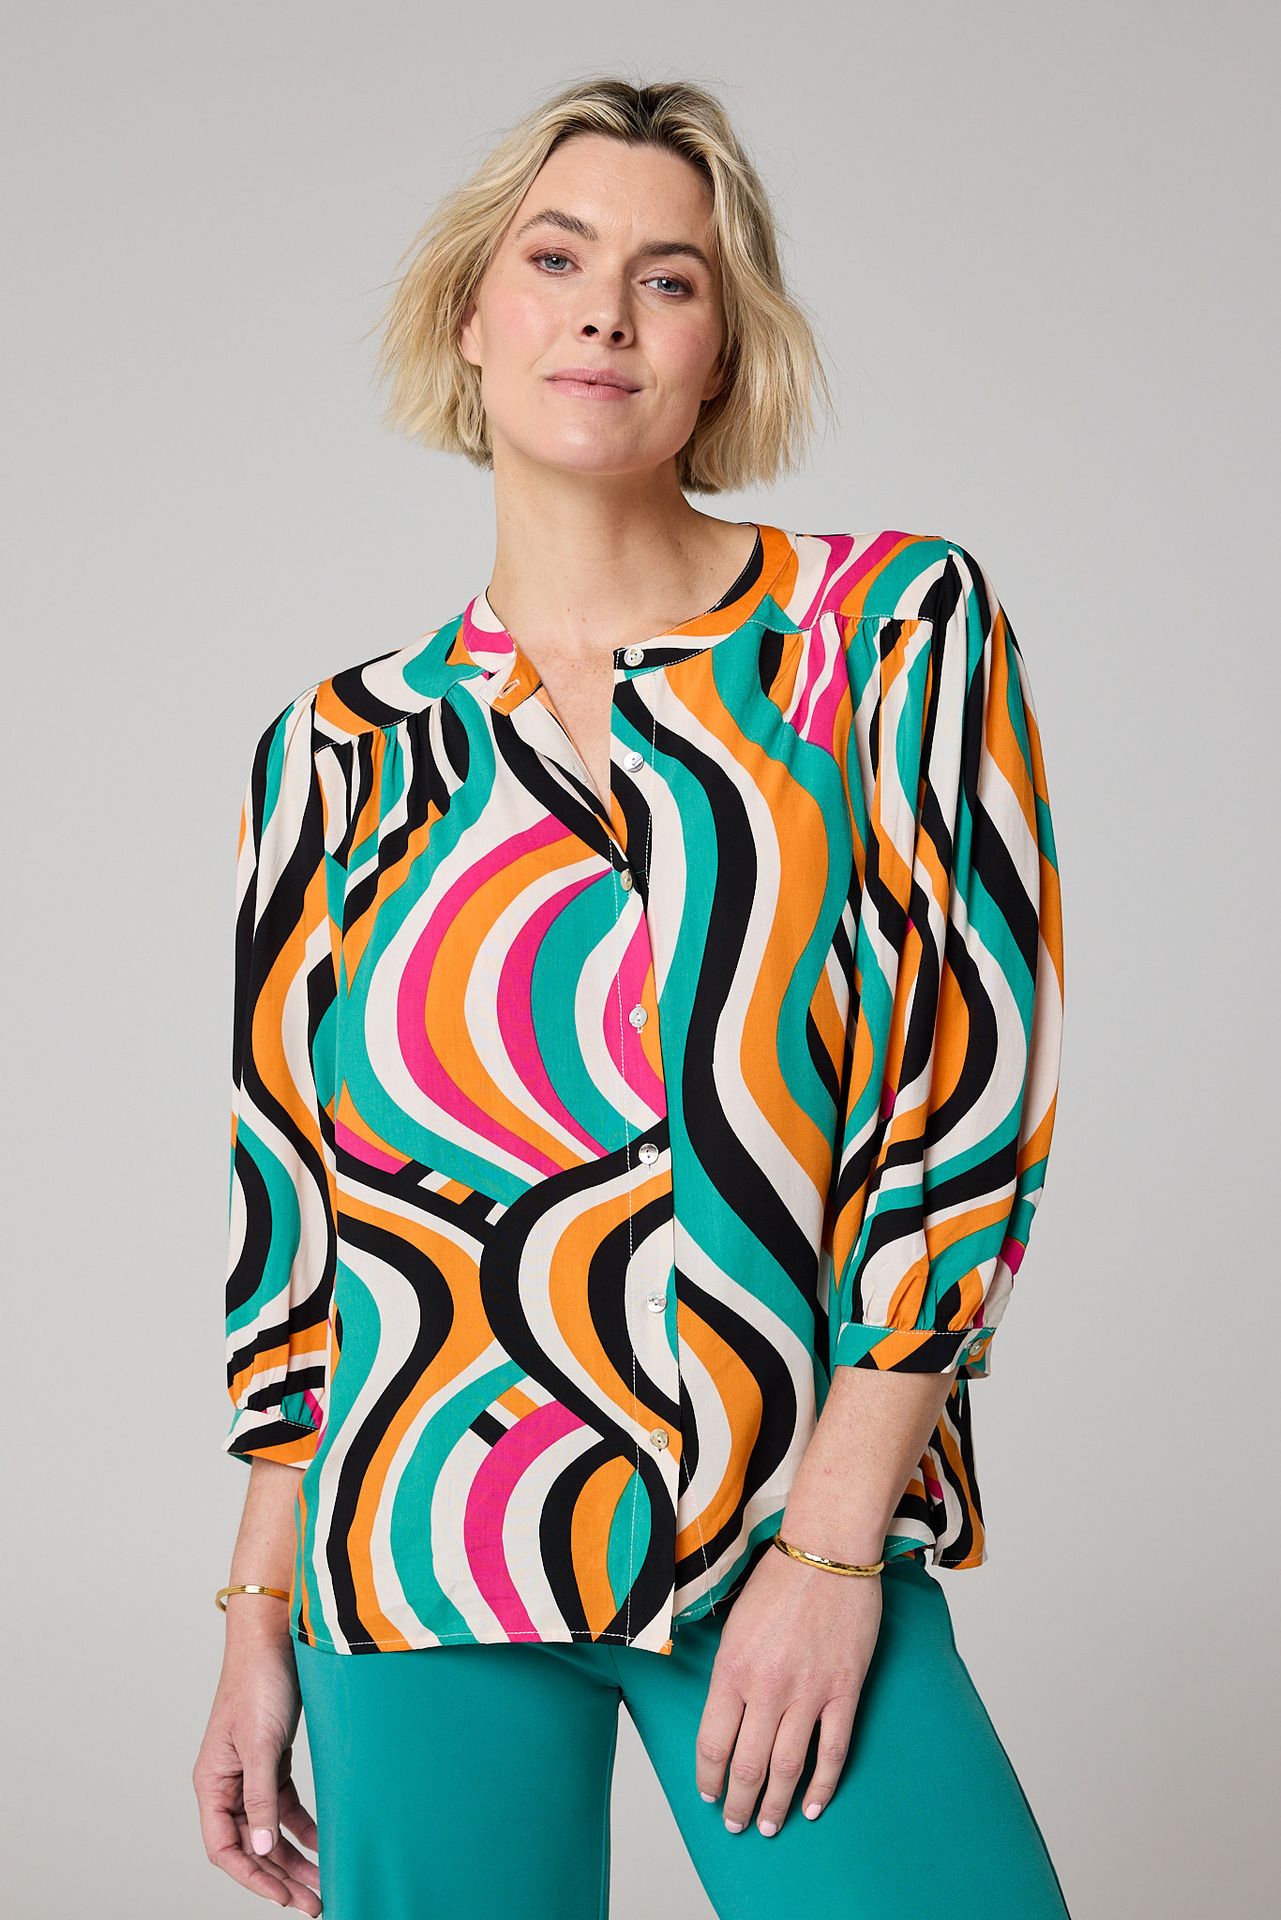  Meerkleurige blouse multicolor 213927-002-36